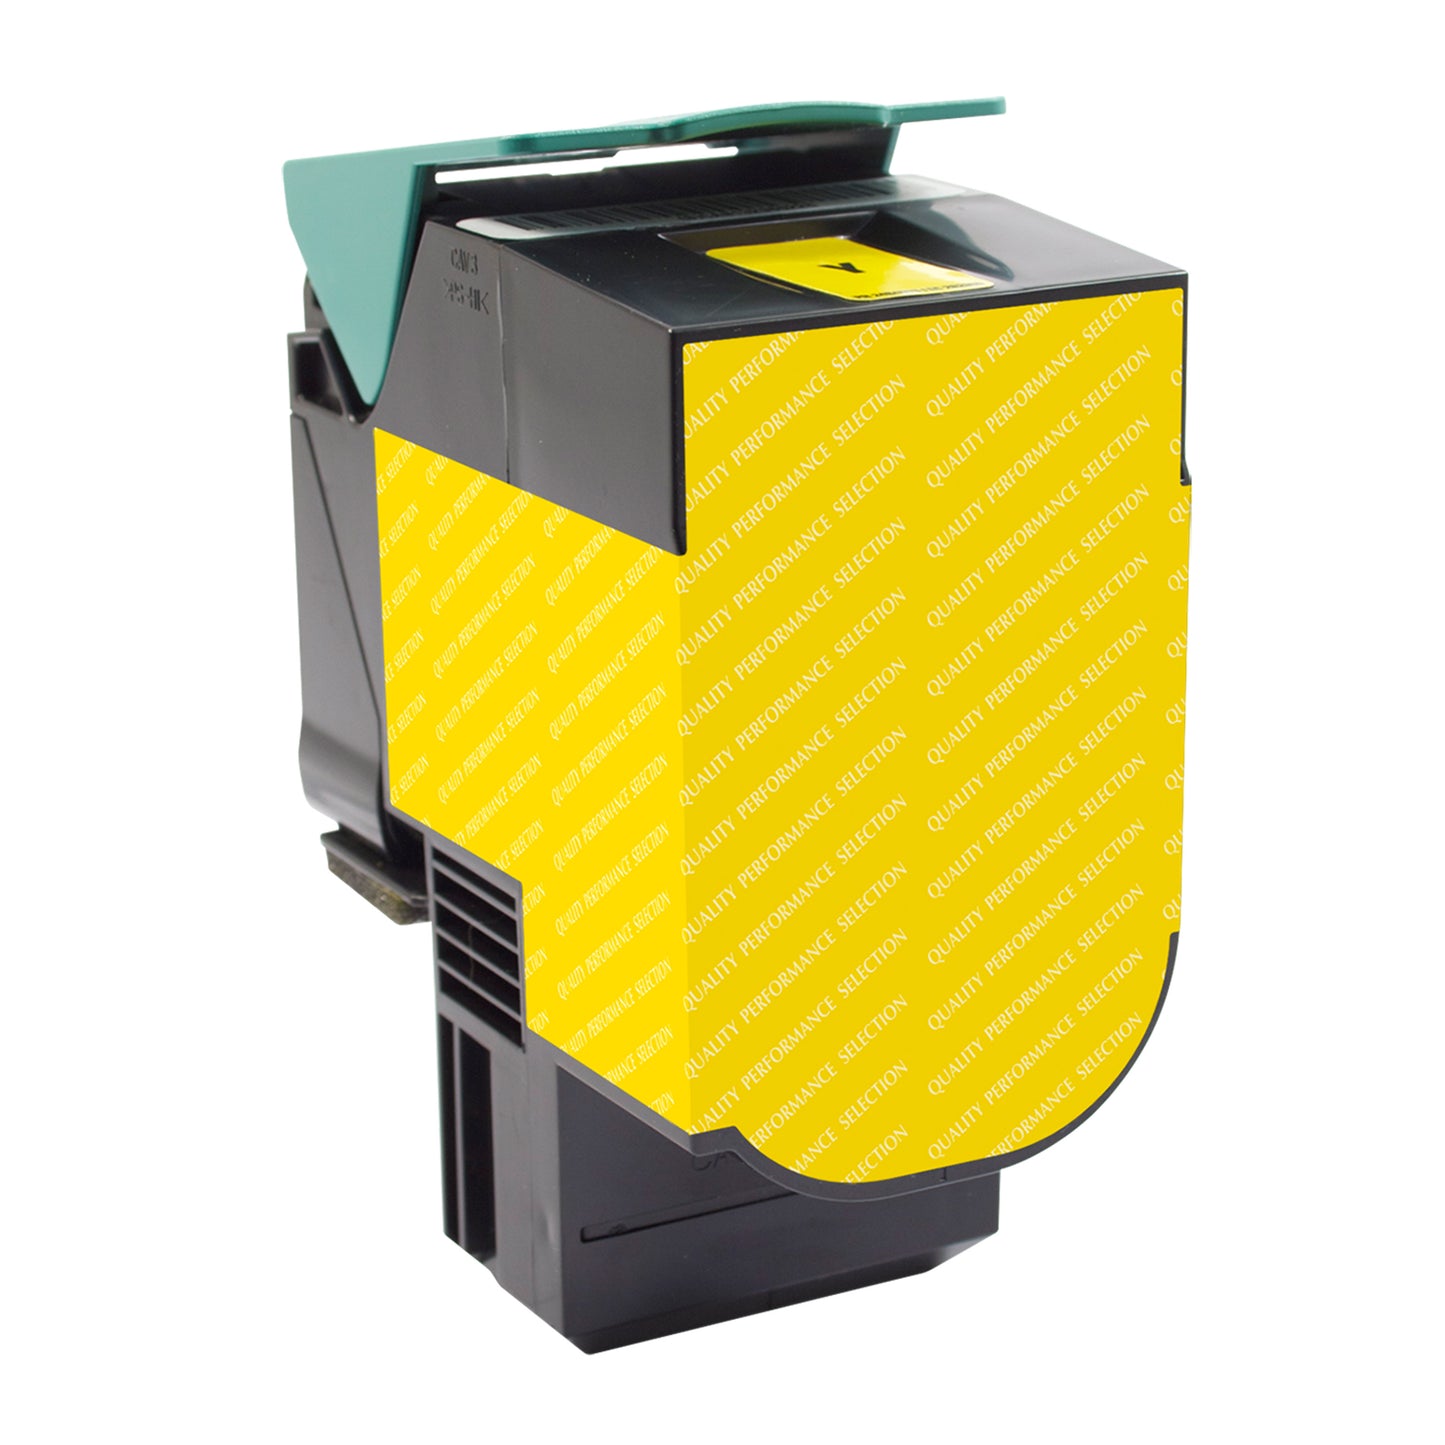 Lexmark XC2130 Remanufactured Yellow Toner Cartridge